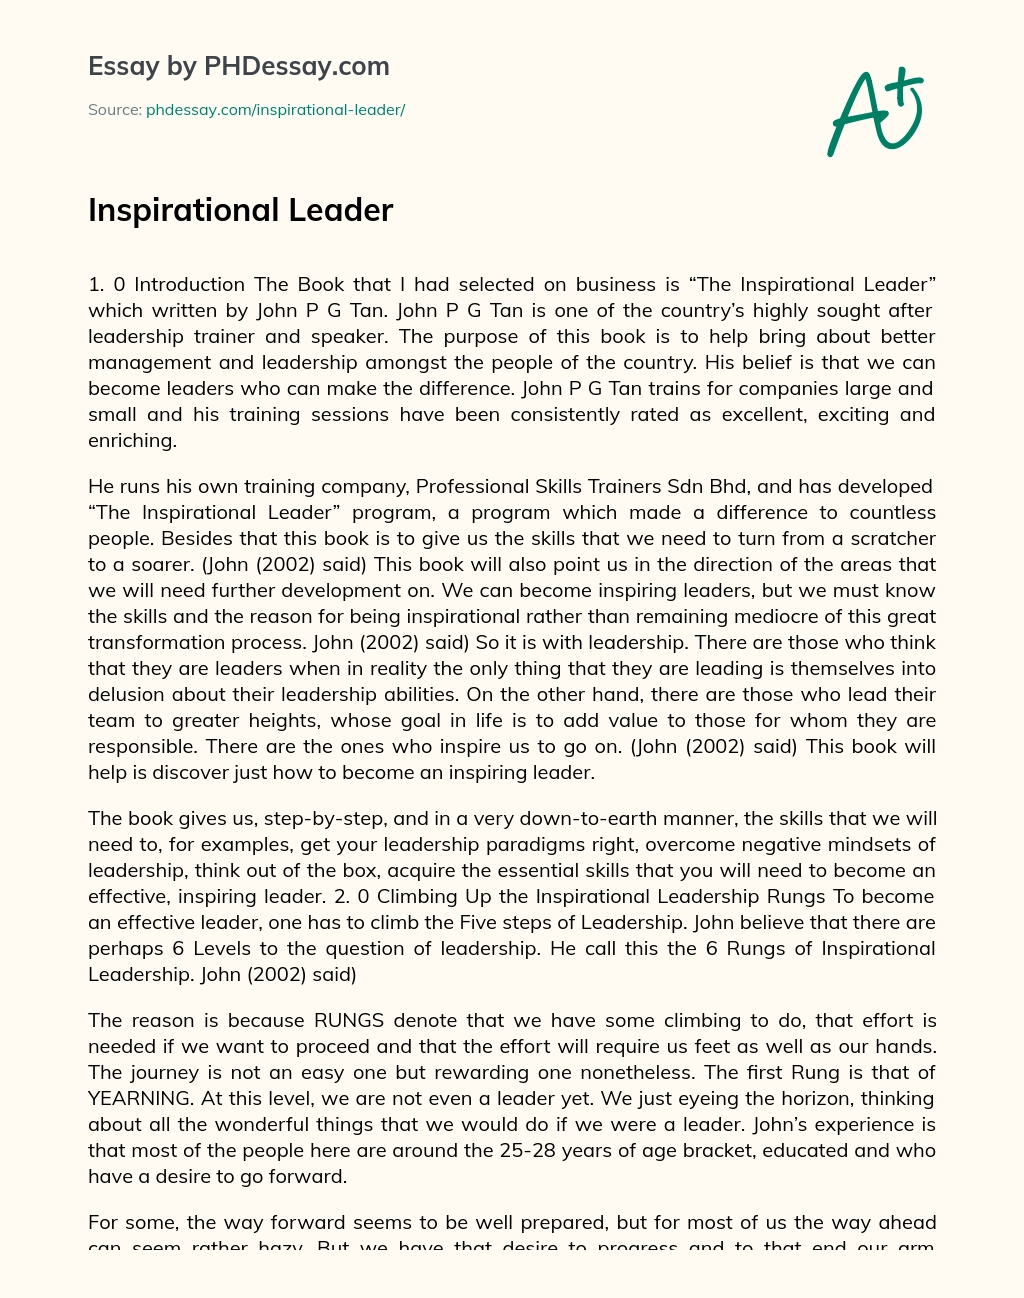 Inspirational Leader essay